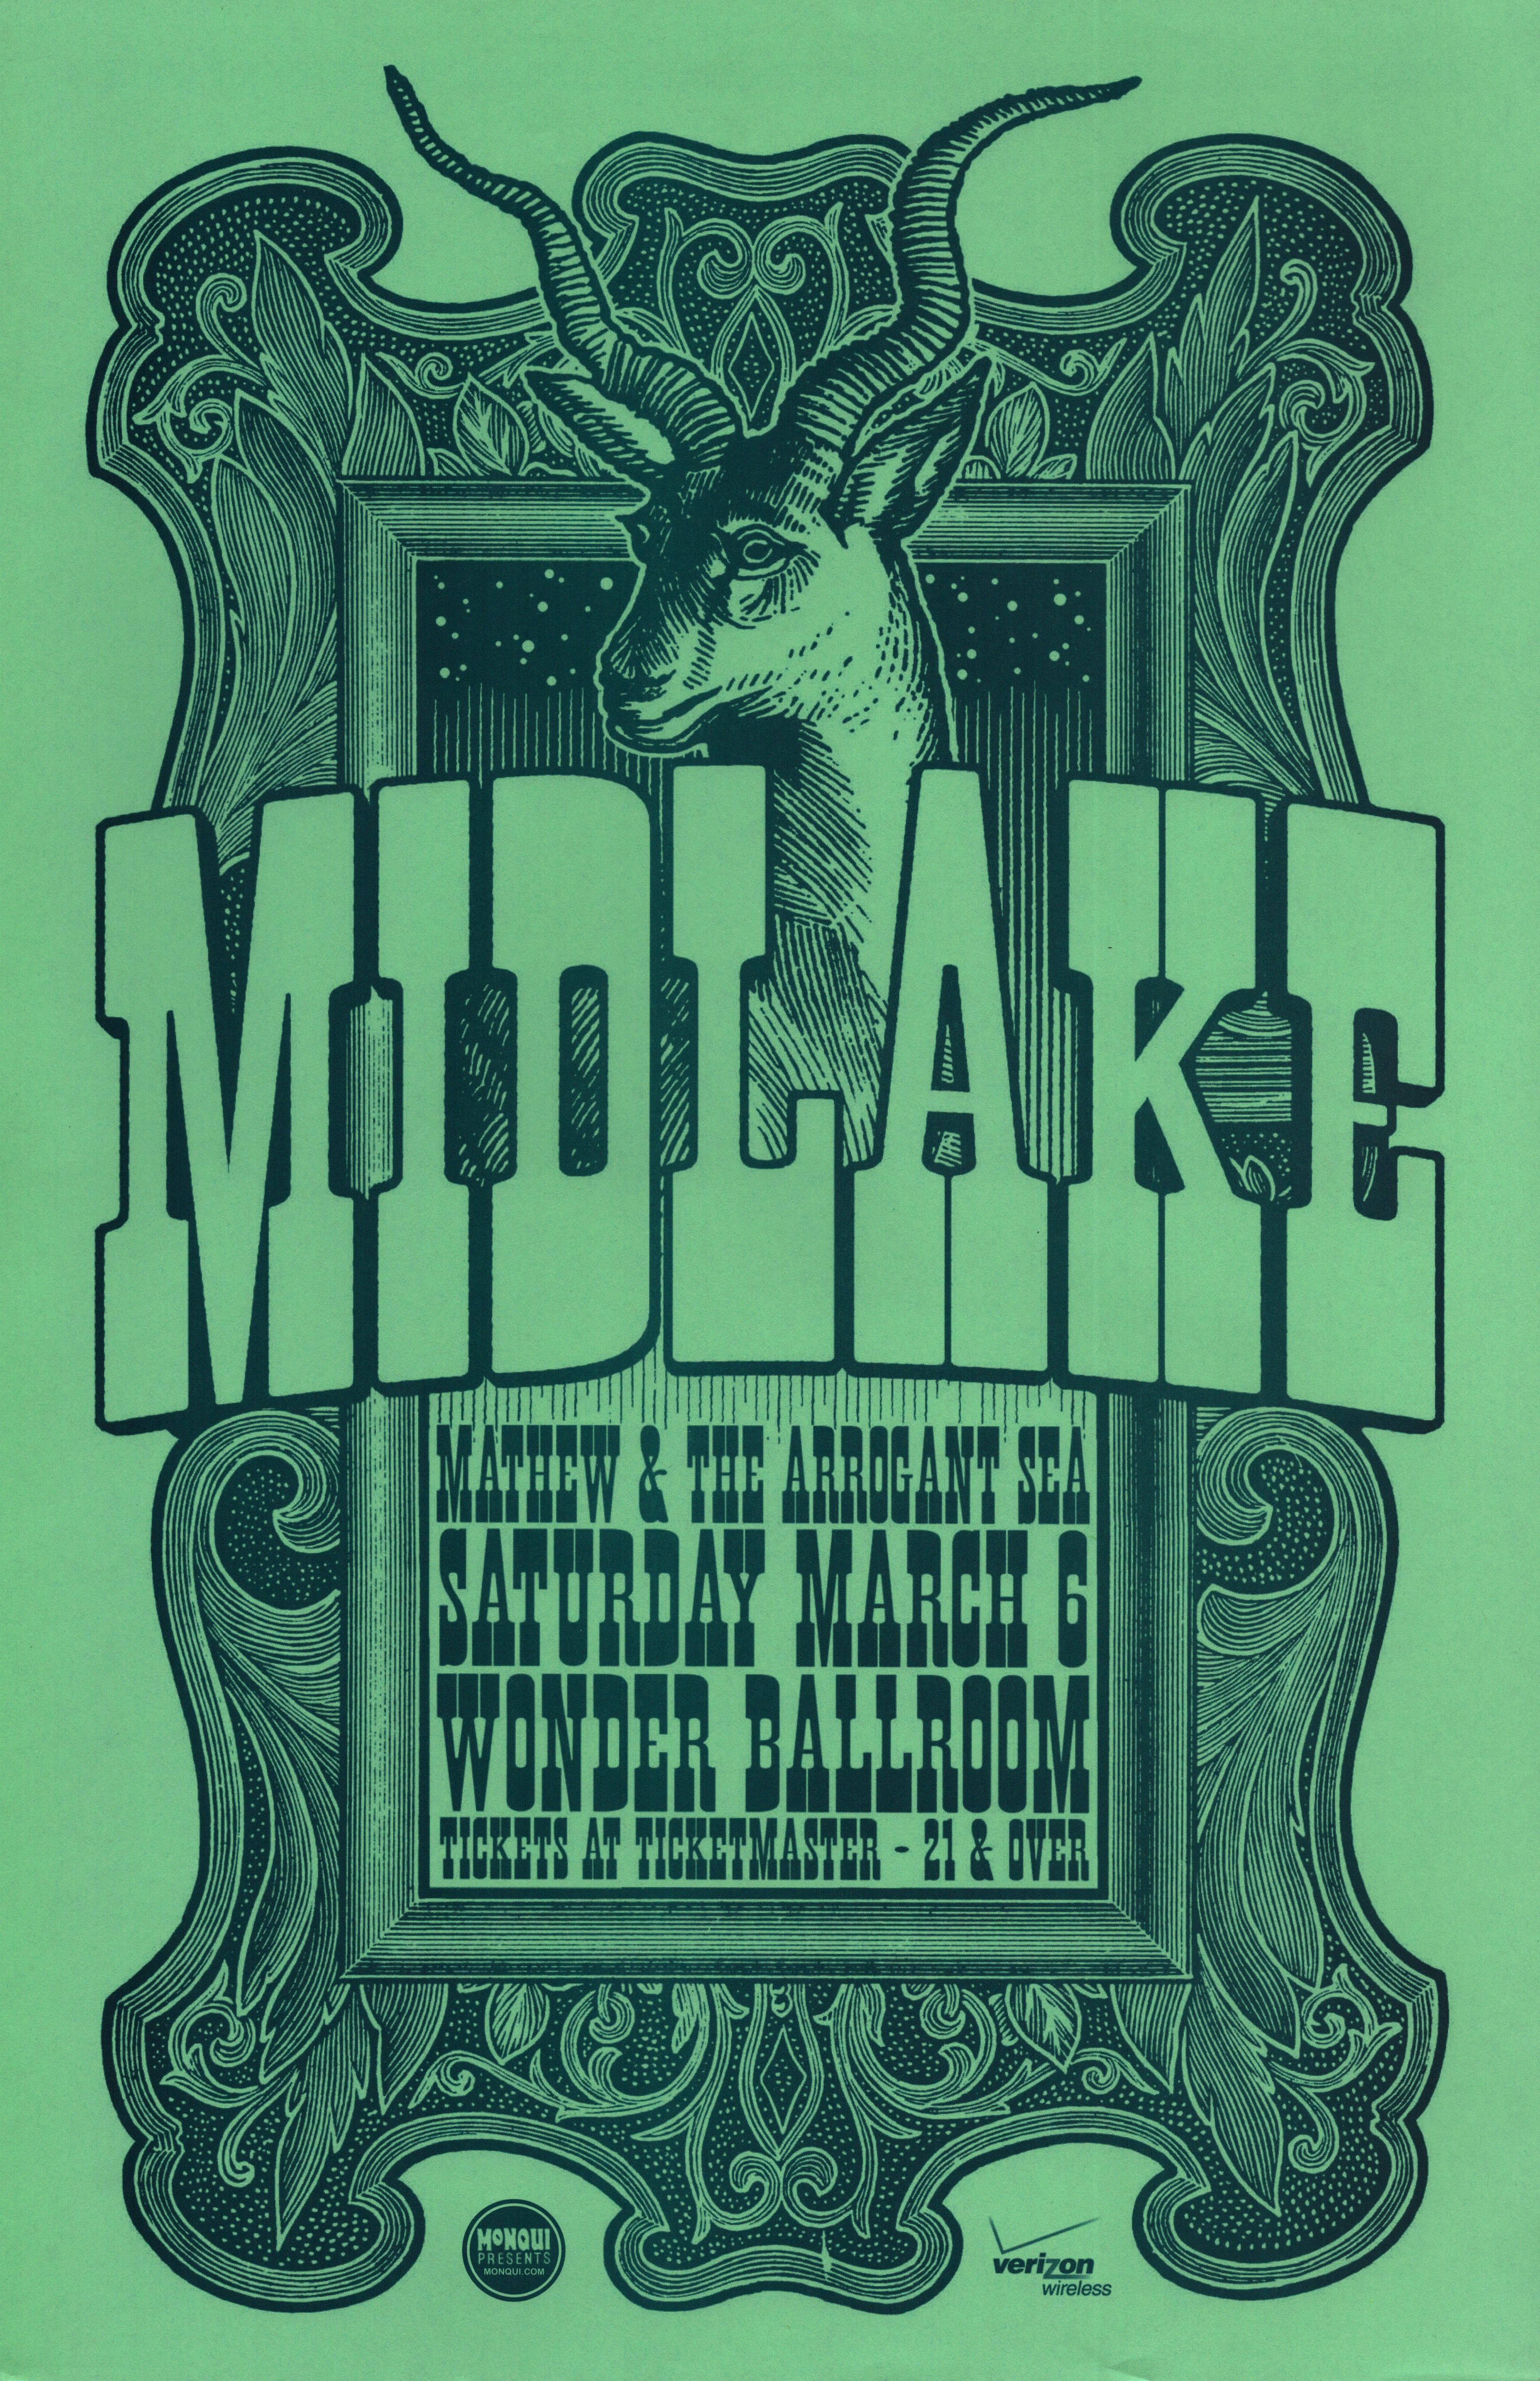 MXP-146.4 Midlake Wonder Ballroom 2010 Concert Poster